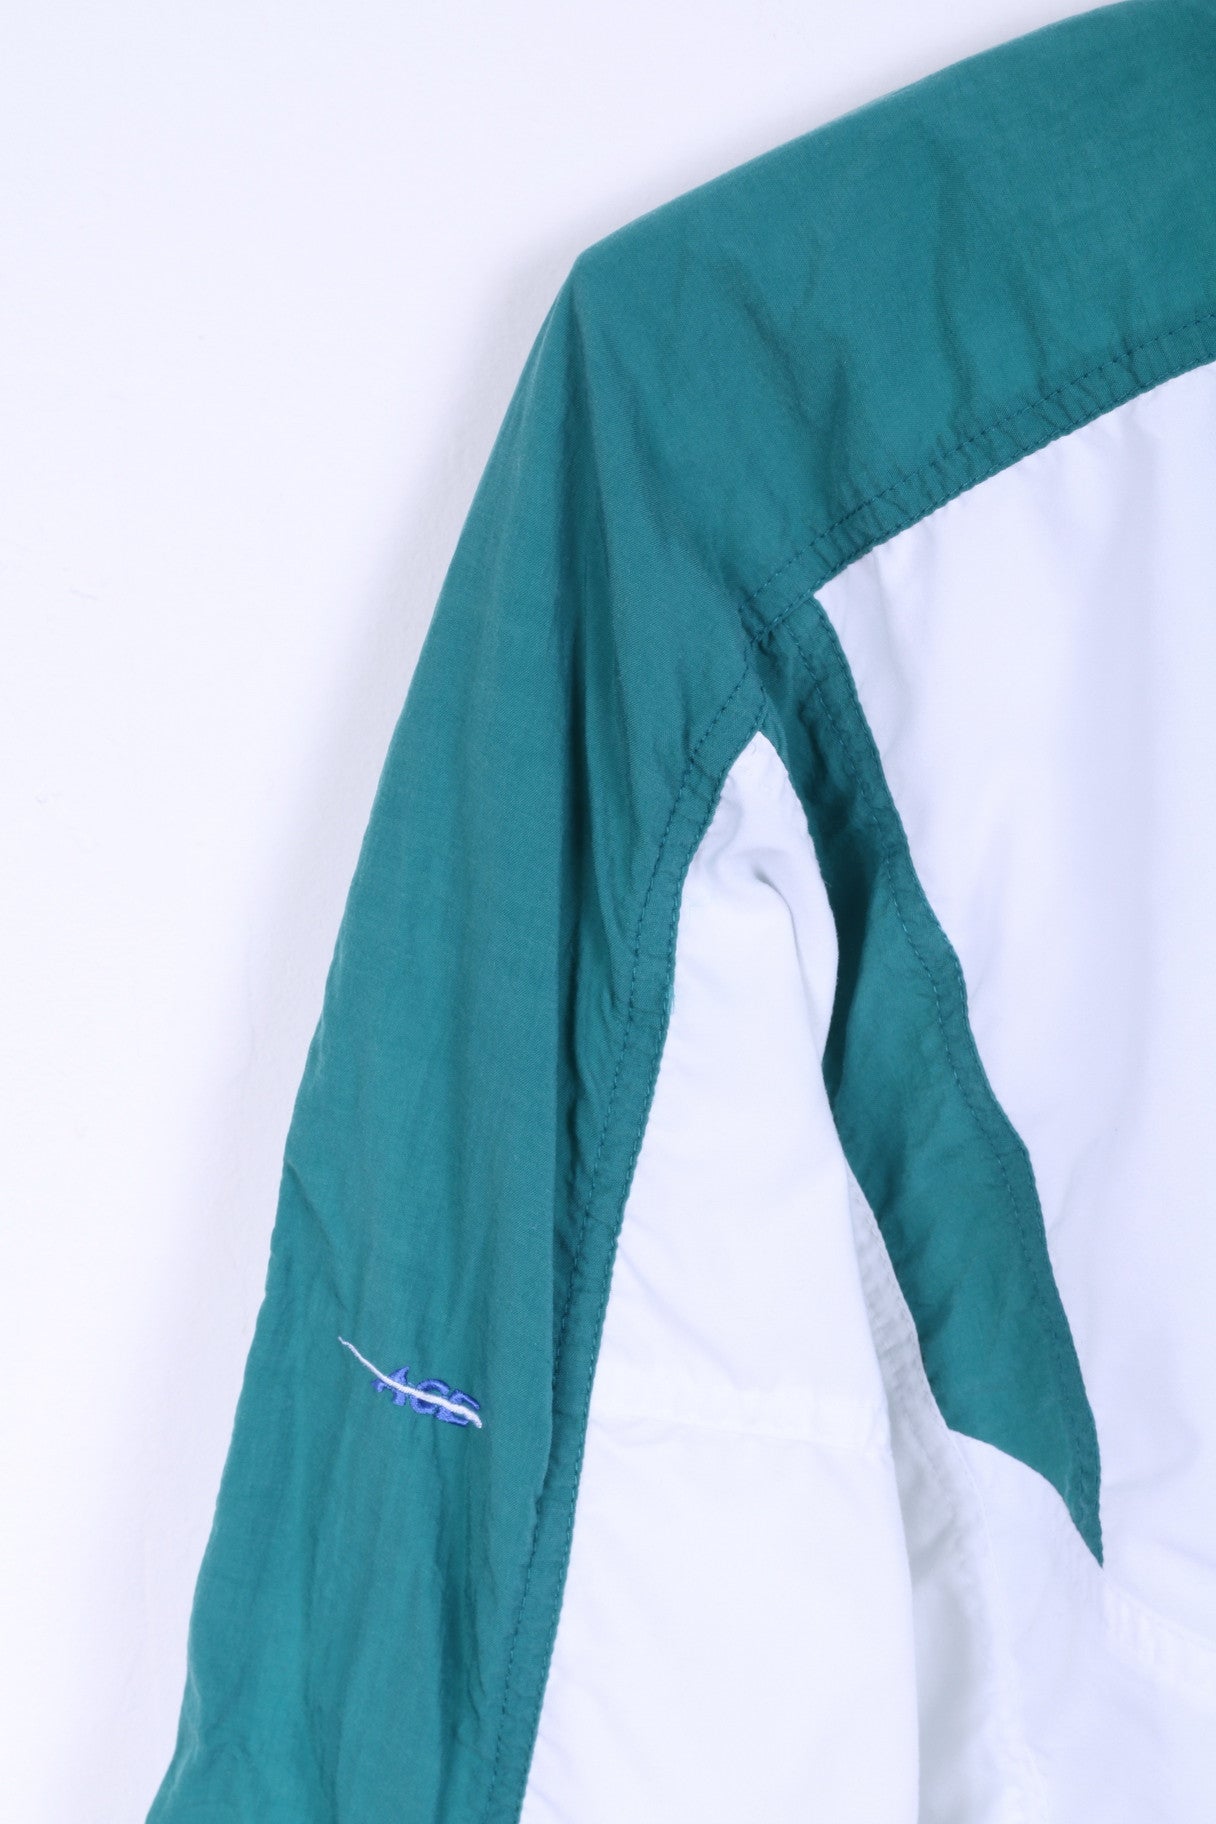 Puma Mens S Track Top Jacket White Nylon Waterproof Zip Up Retro